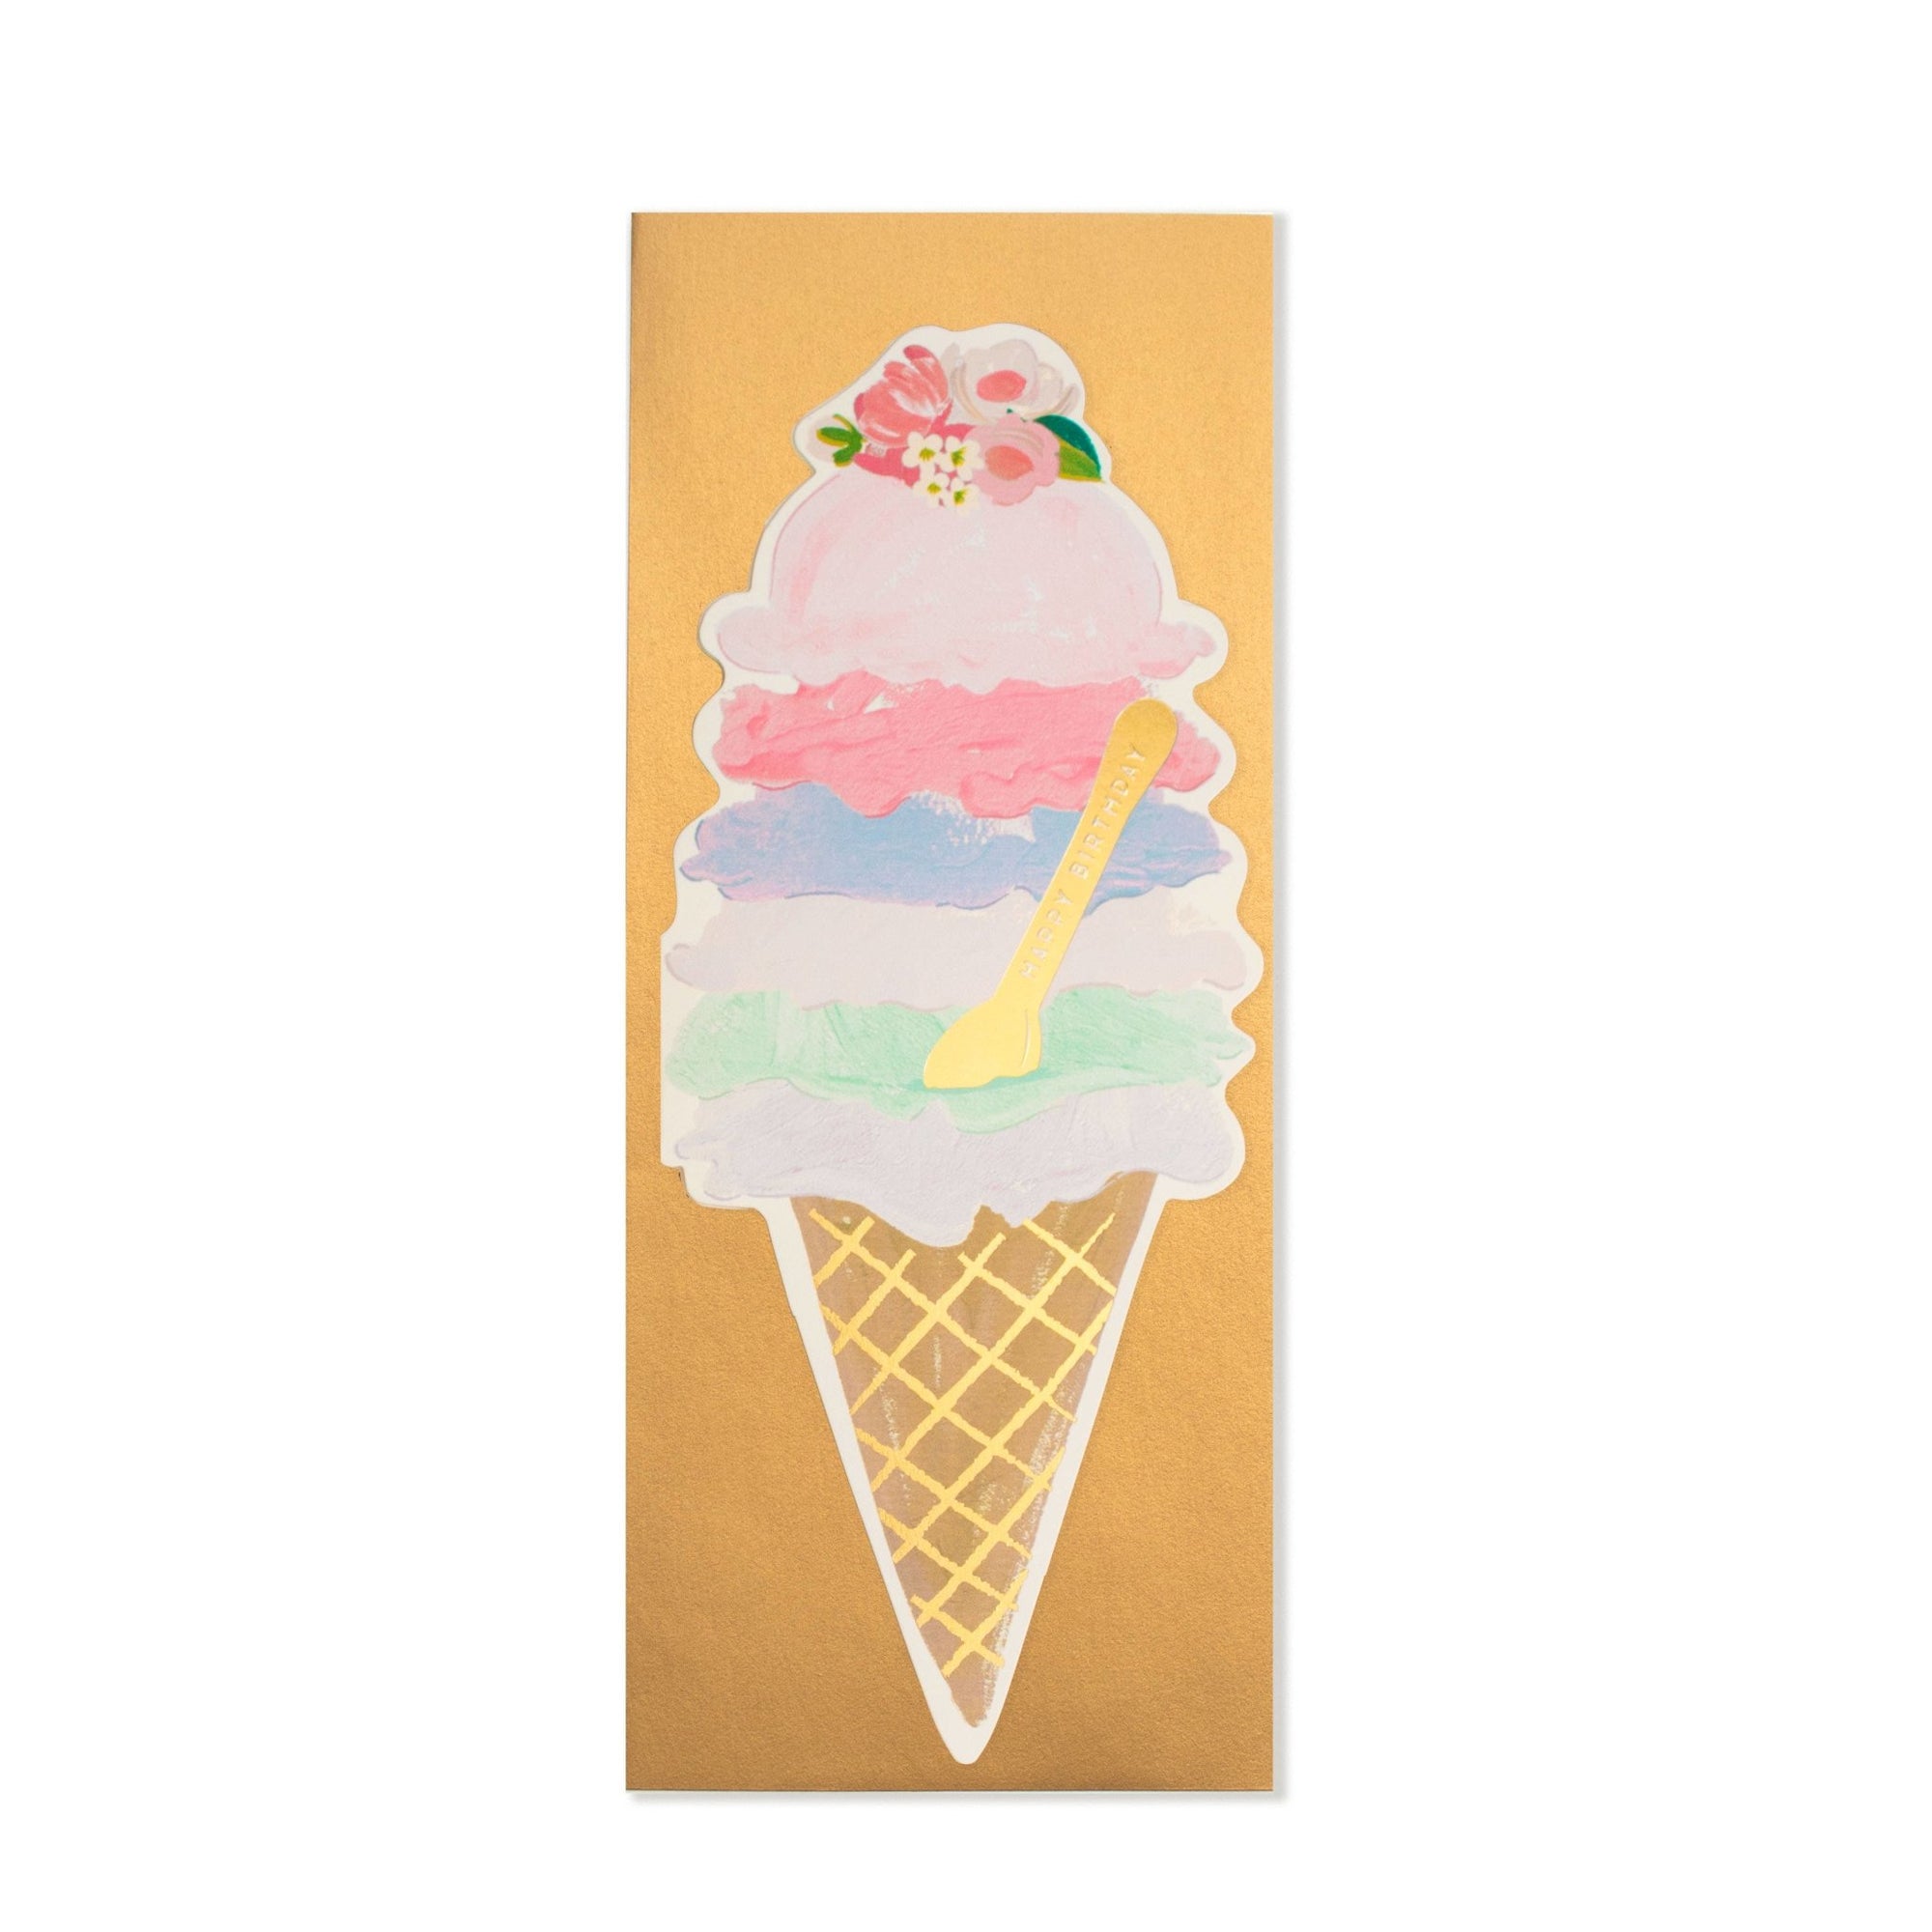 Happy Birthday Ice Cream Cone Greeting Card - Abigail Fox Designs